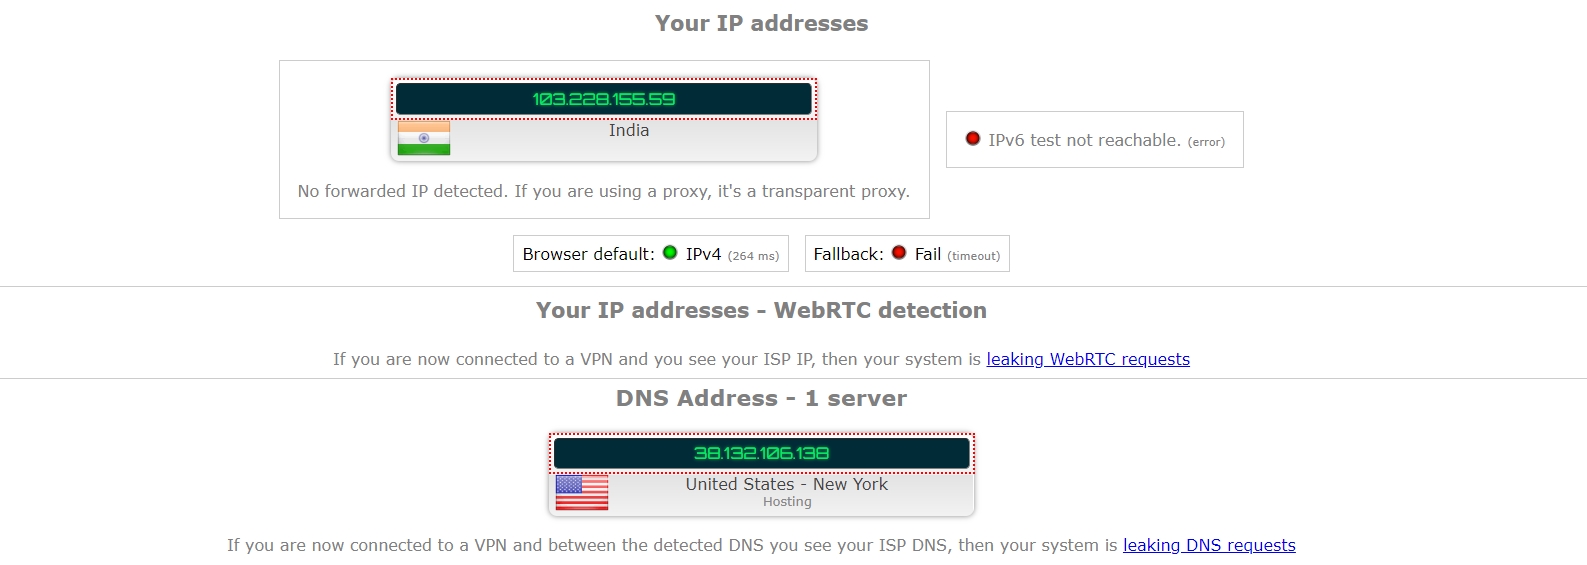 ip leak test - Most Secure VPN for Windows PC